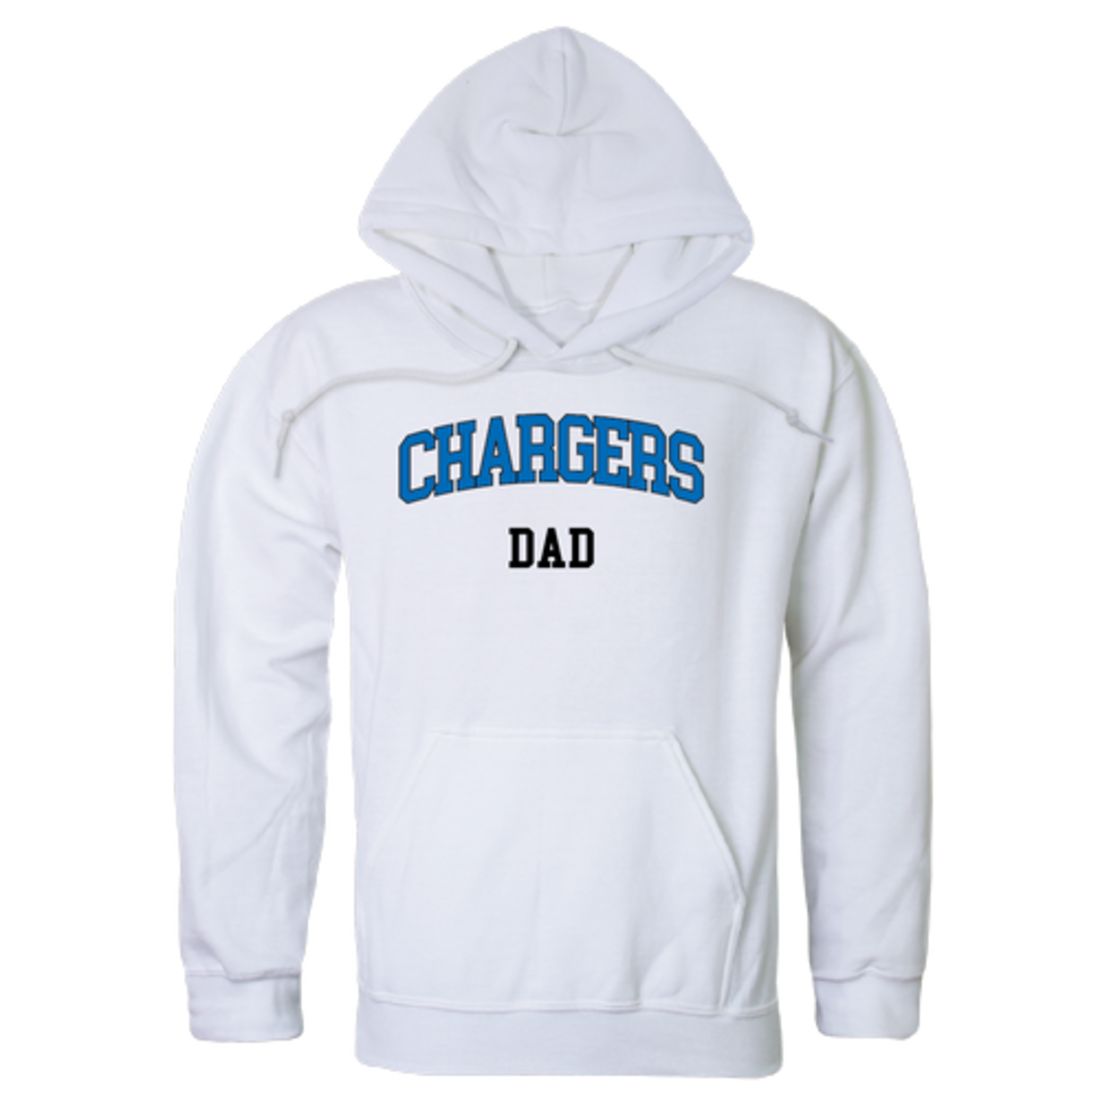 The-University-of-Alabama-in-Huntsville-Chargers-Dad-Fleece-Hoodie-Sweatshirts